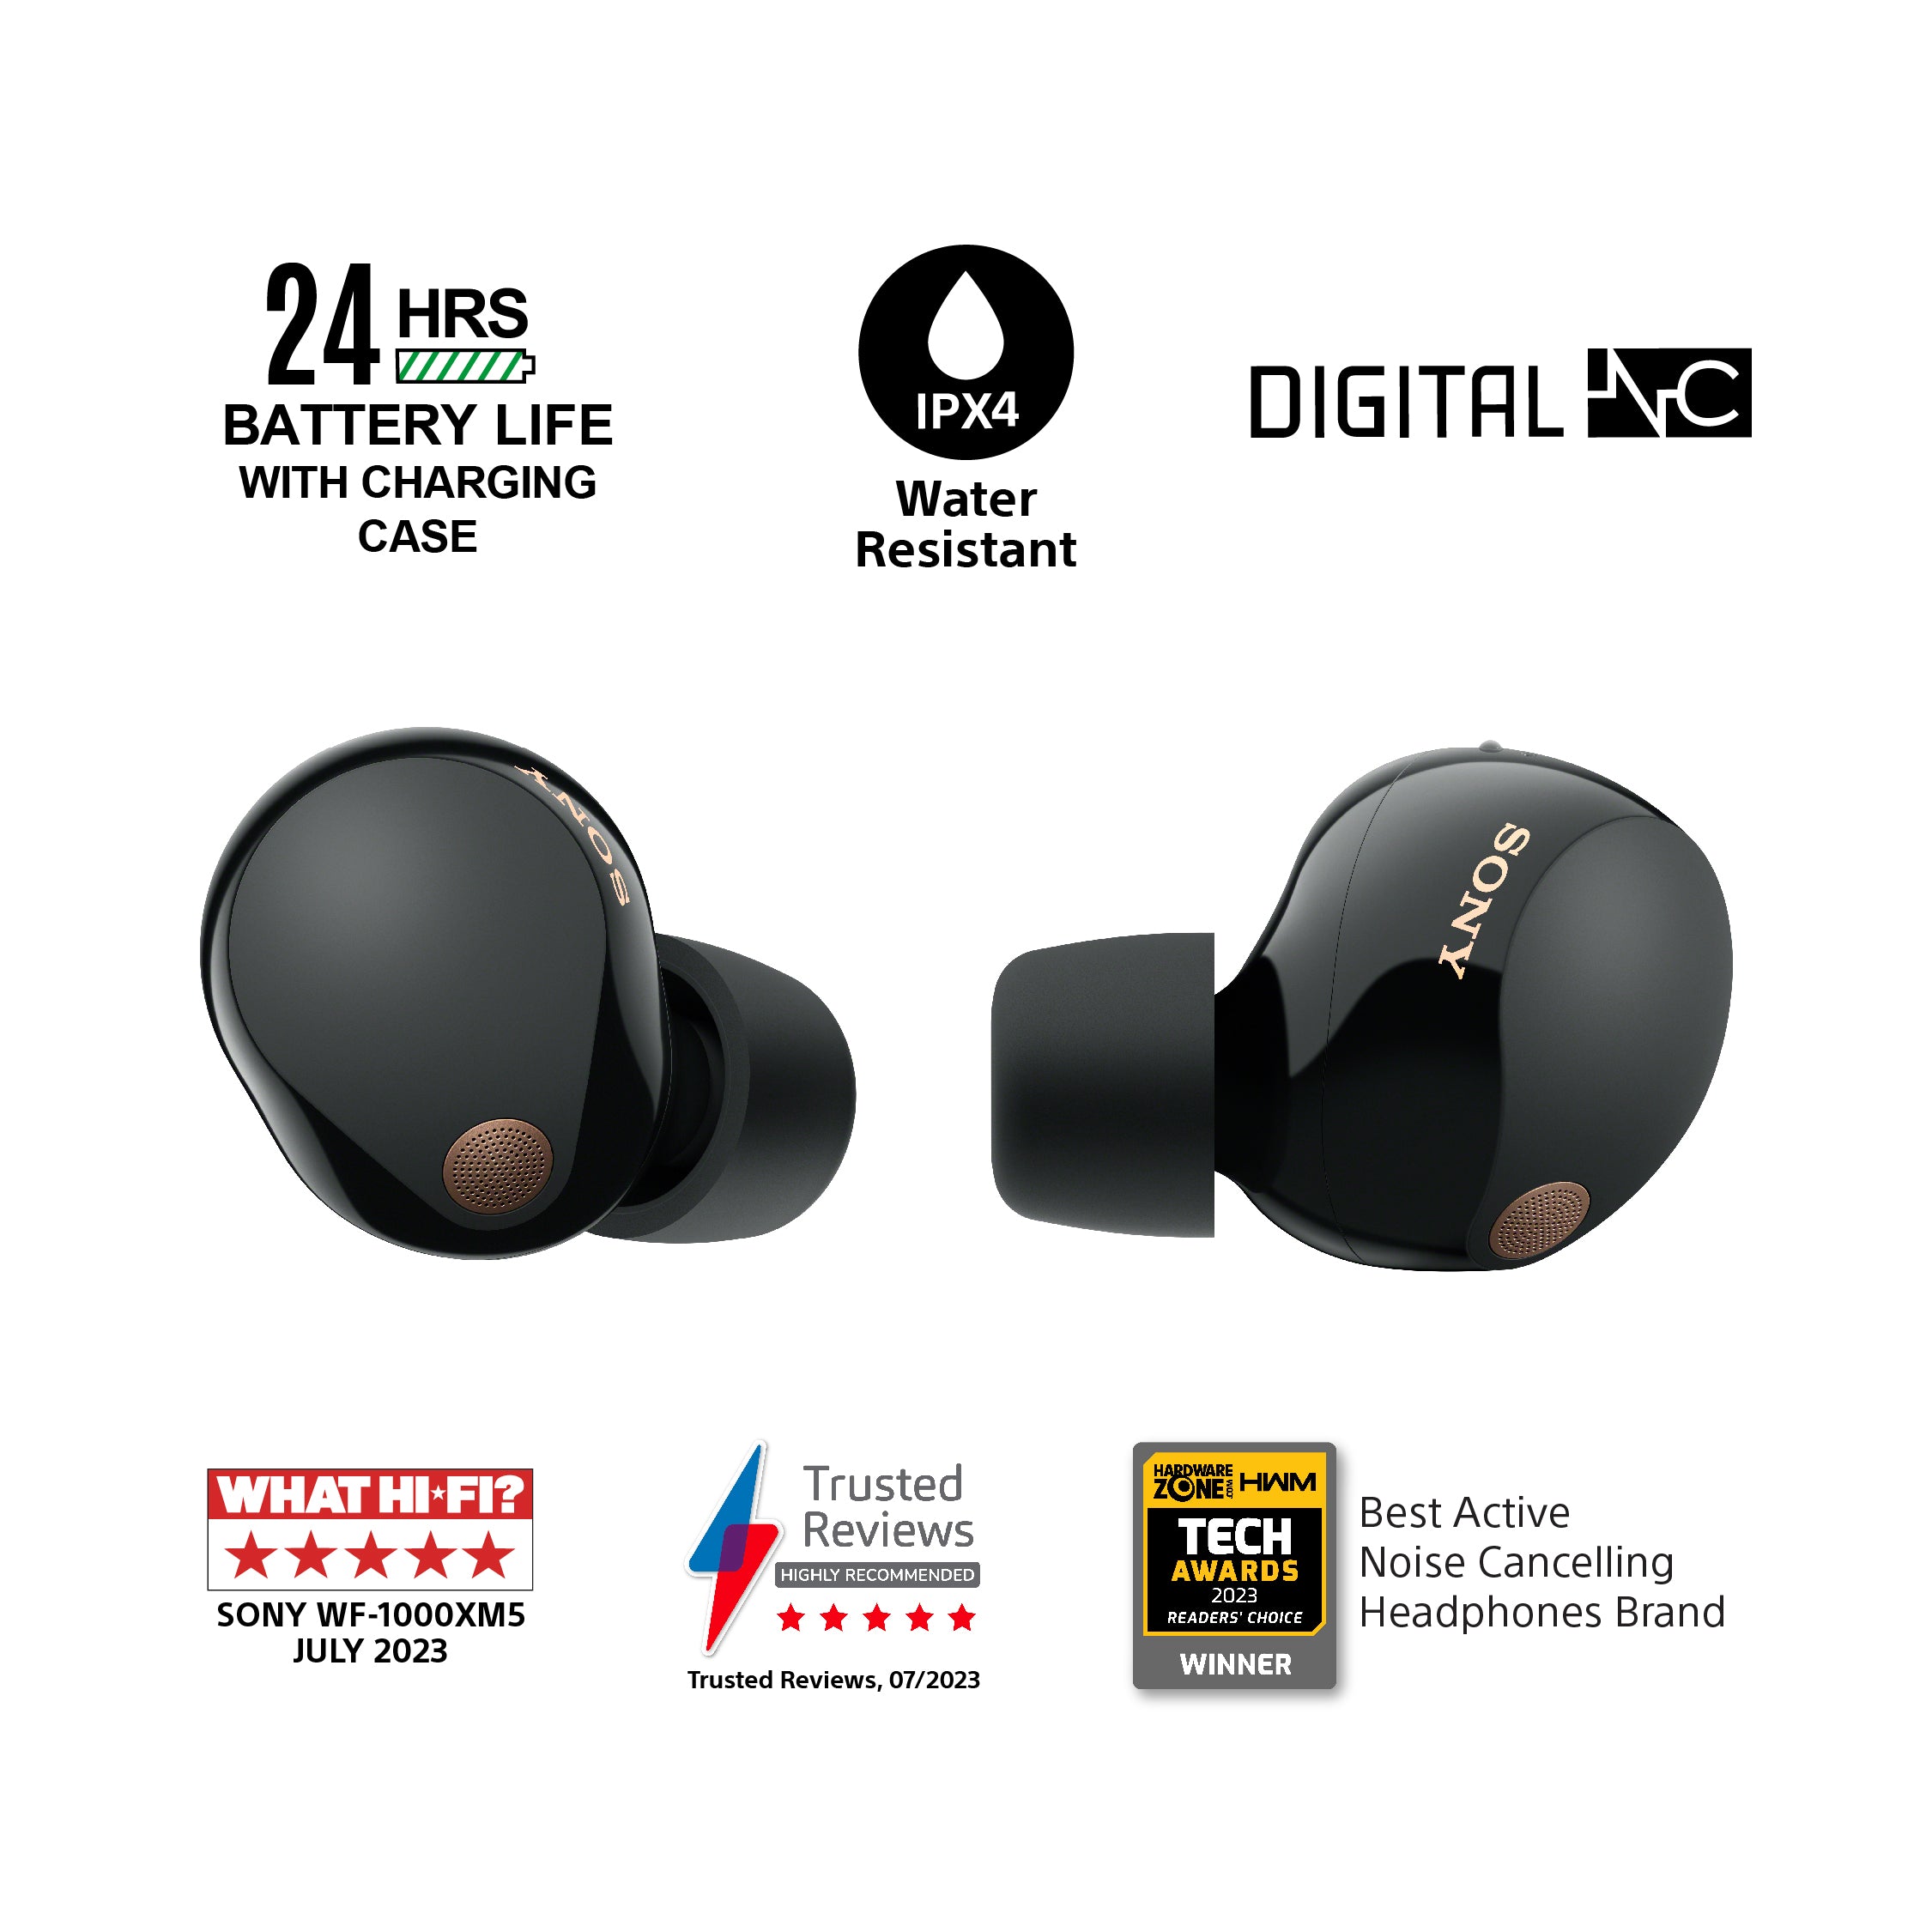 WF-1000XM5 Wireless Noise Cancelling Headphones